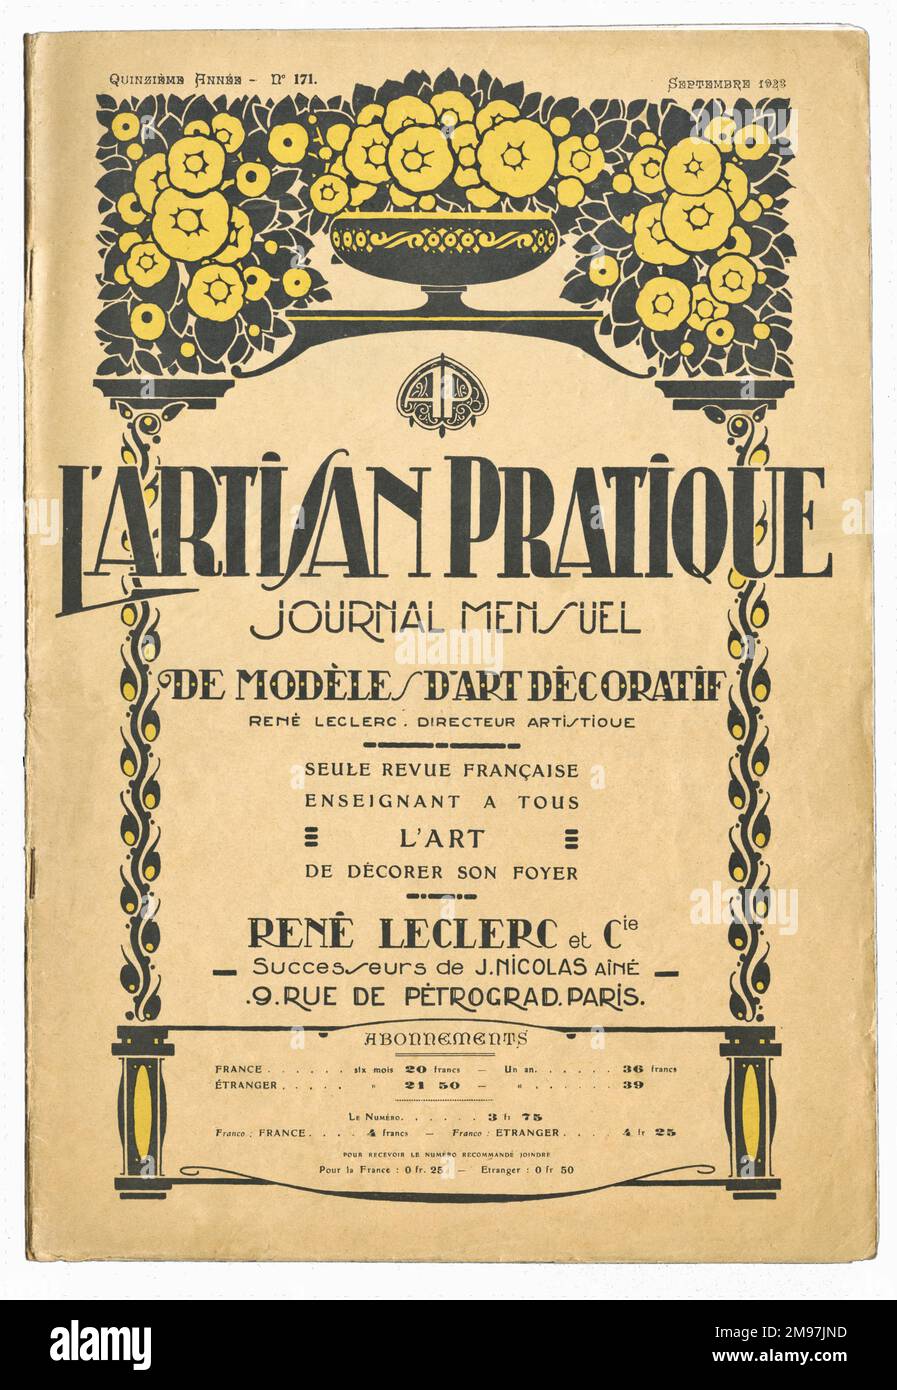 Copertina per una rivista d'arte decorativa francese, l'Artisan Pratique, settembre 1923. Foto Stock